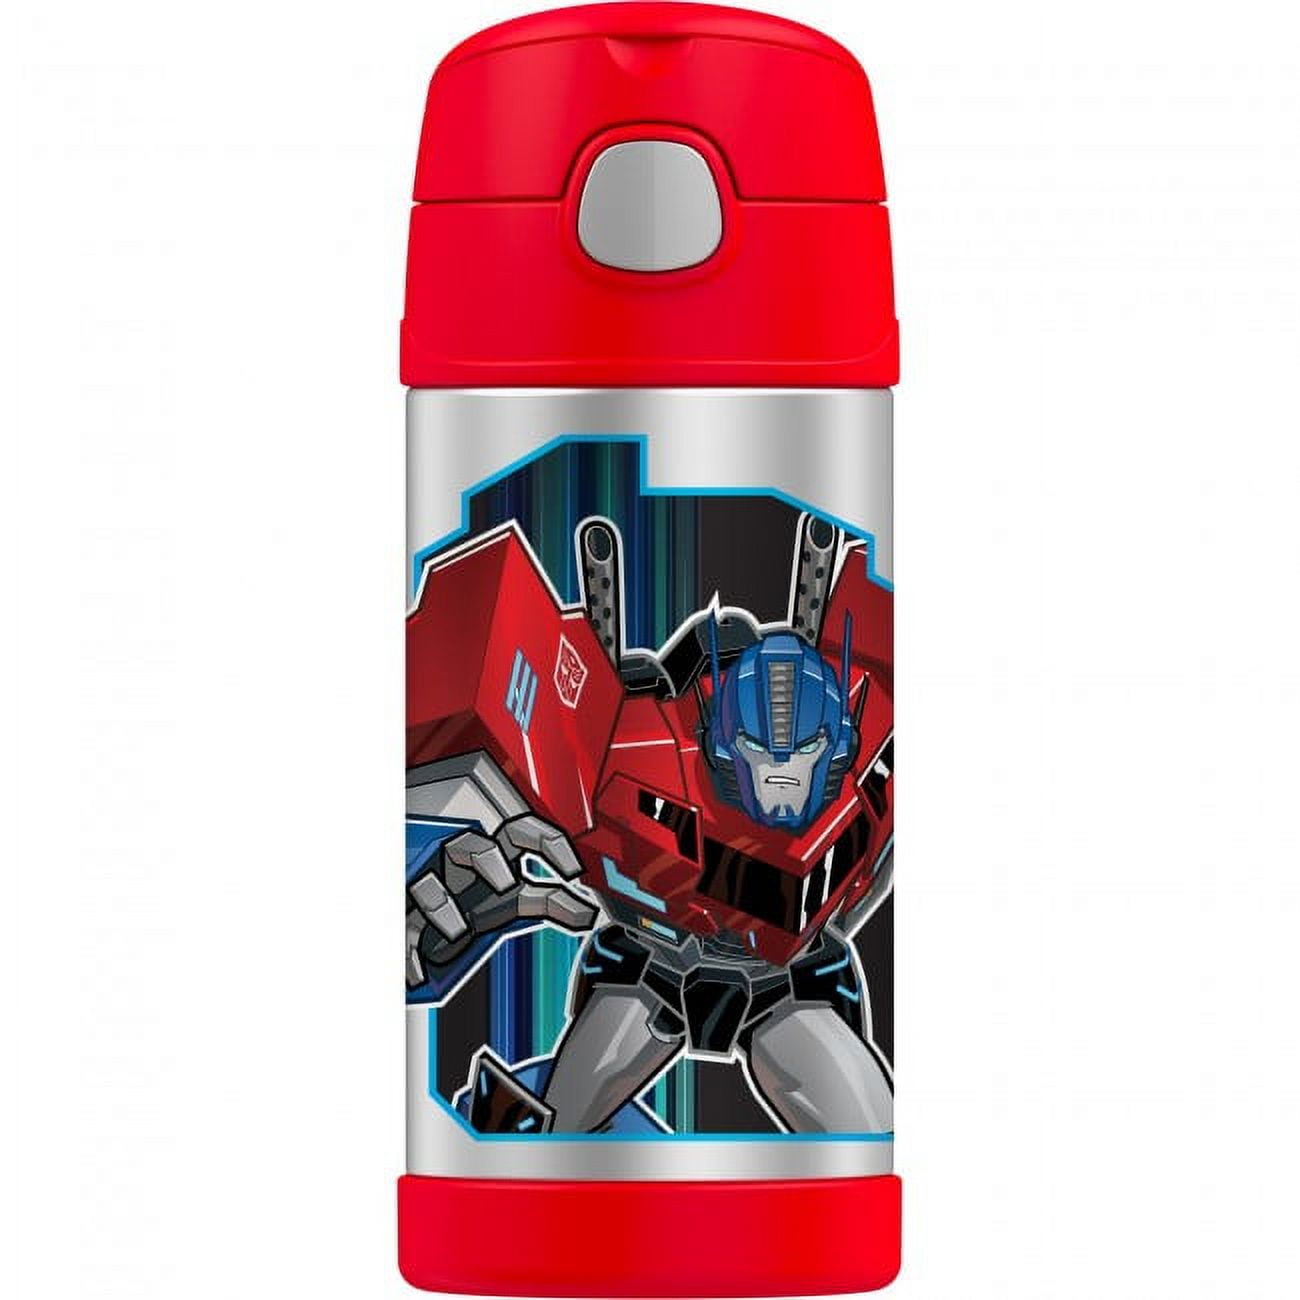 Blue Transformers Plastic Water Bottle Decepticons / Autobots NEW Unused